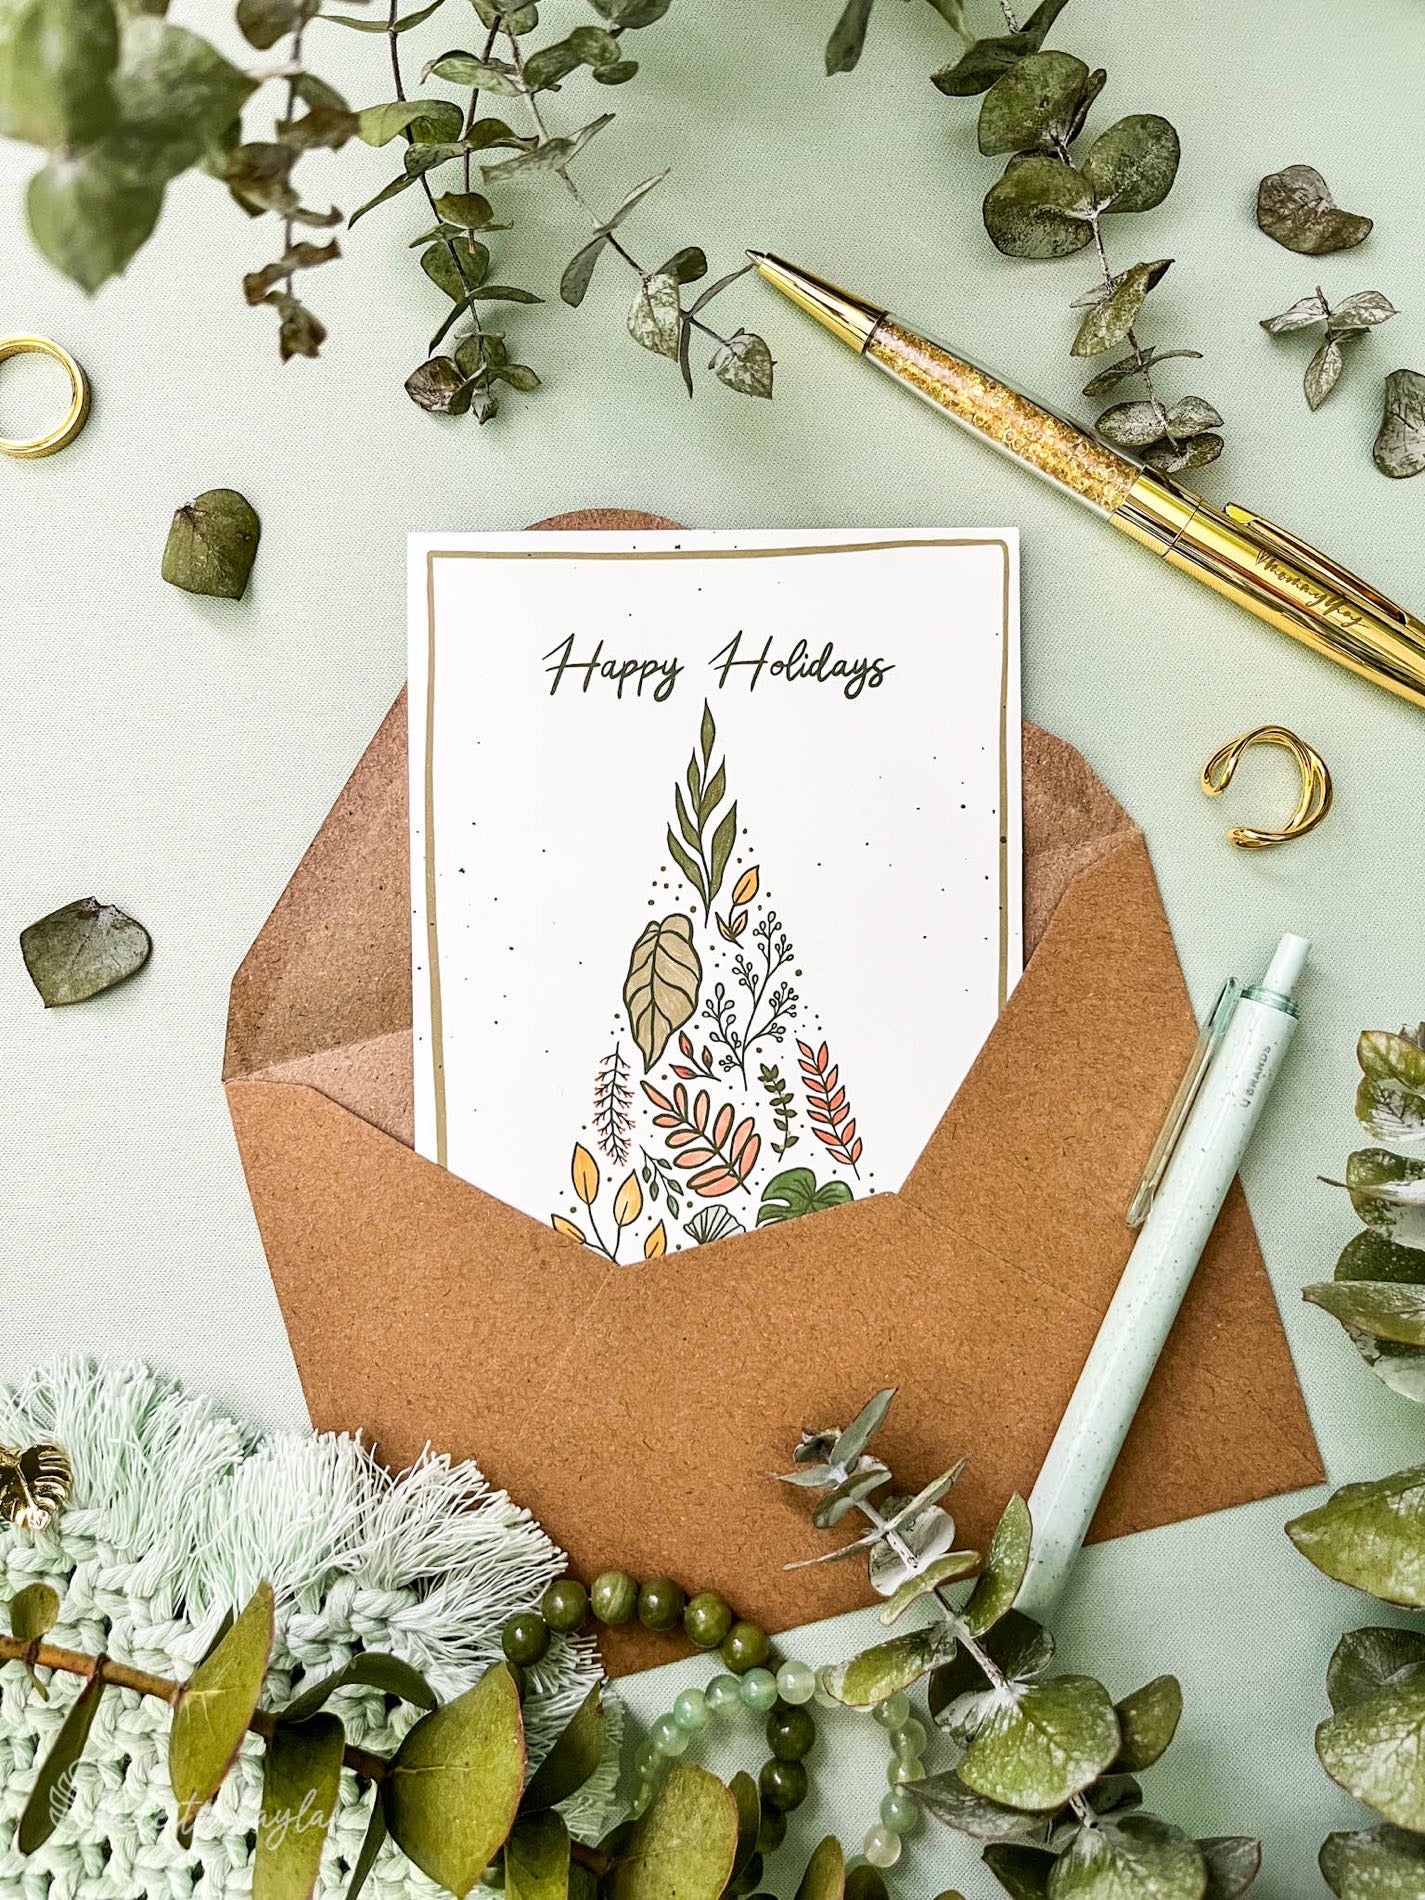 Happy Holidays Leaf Tree Greeting Card